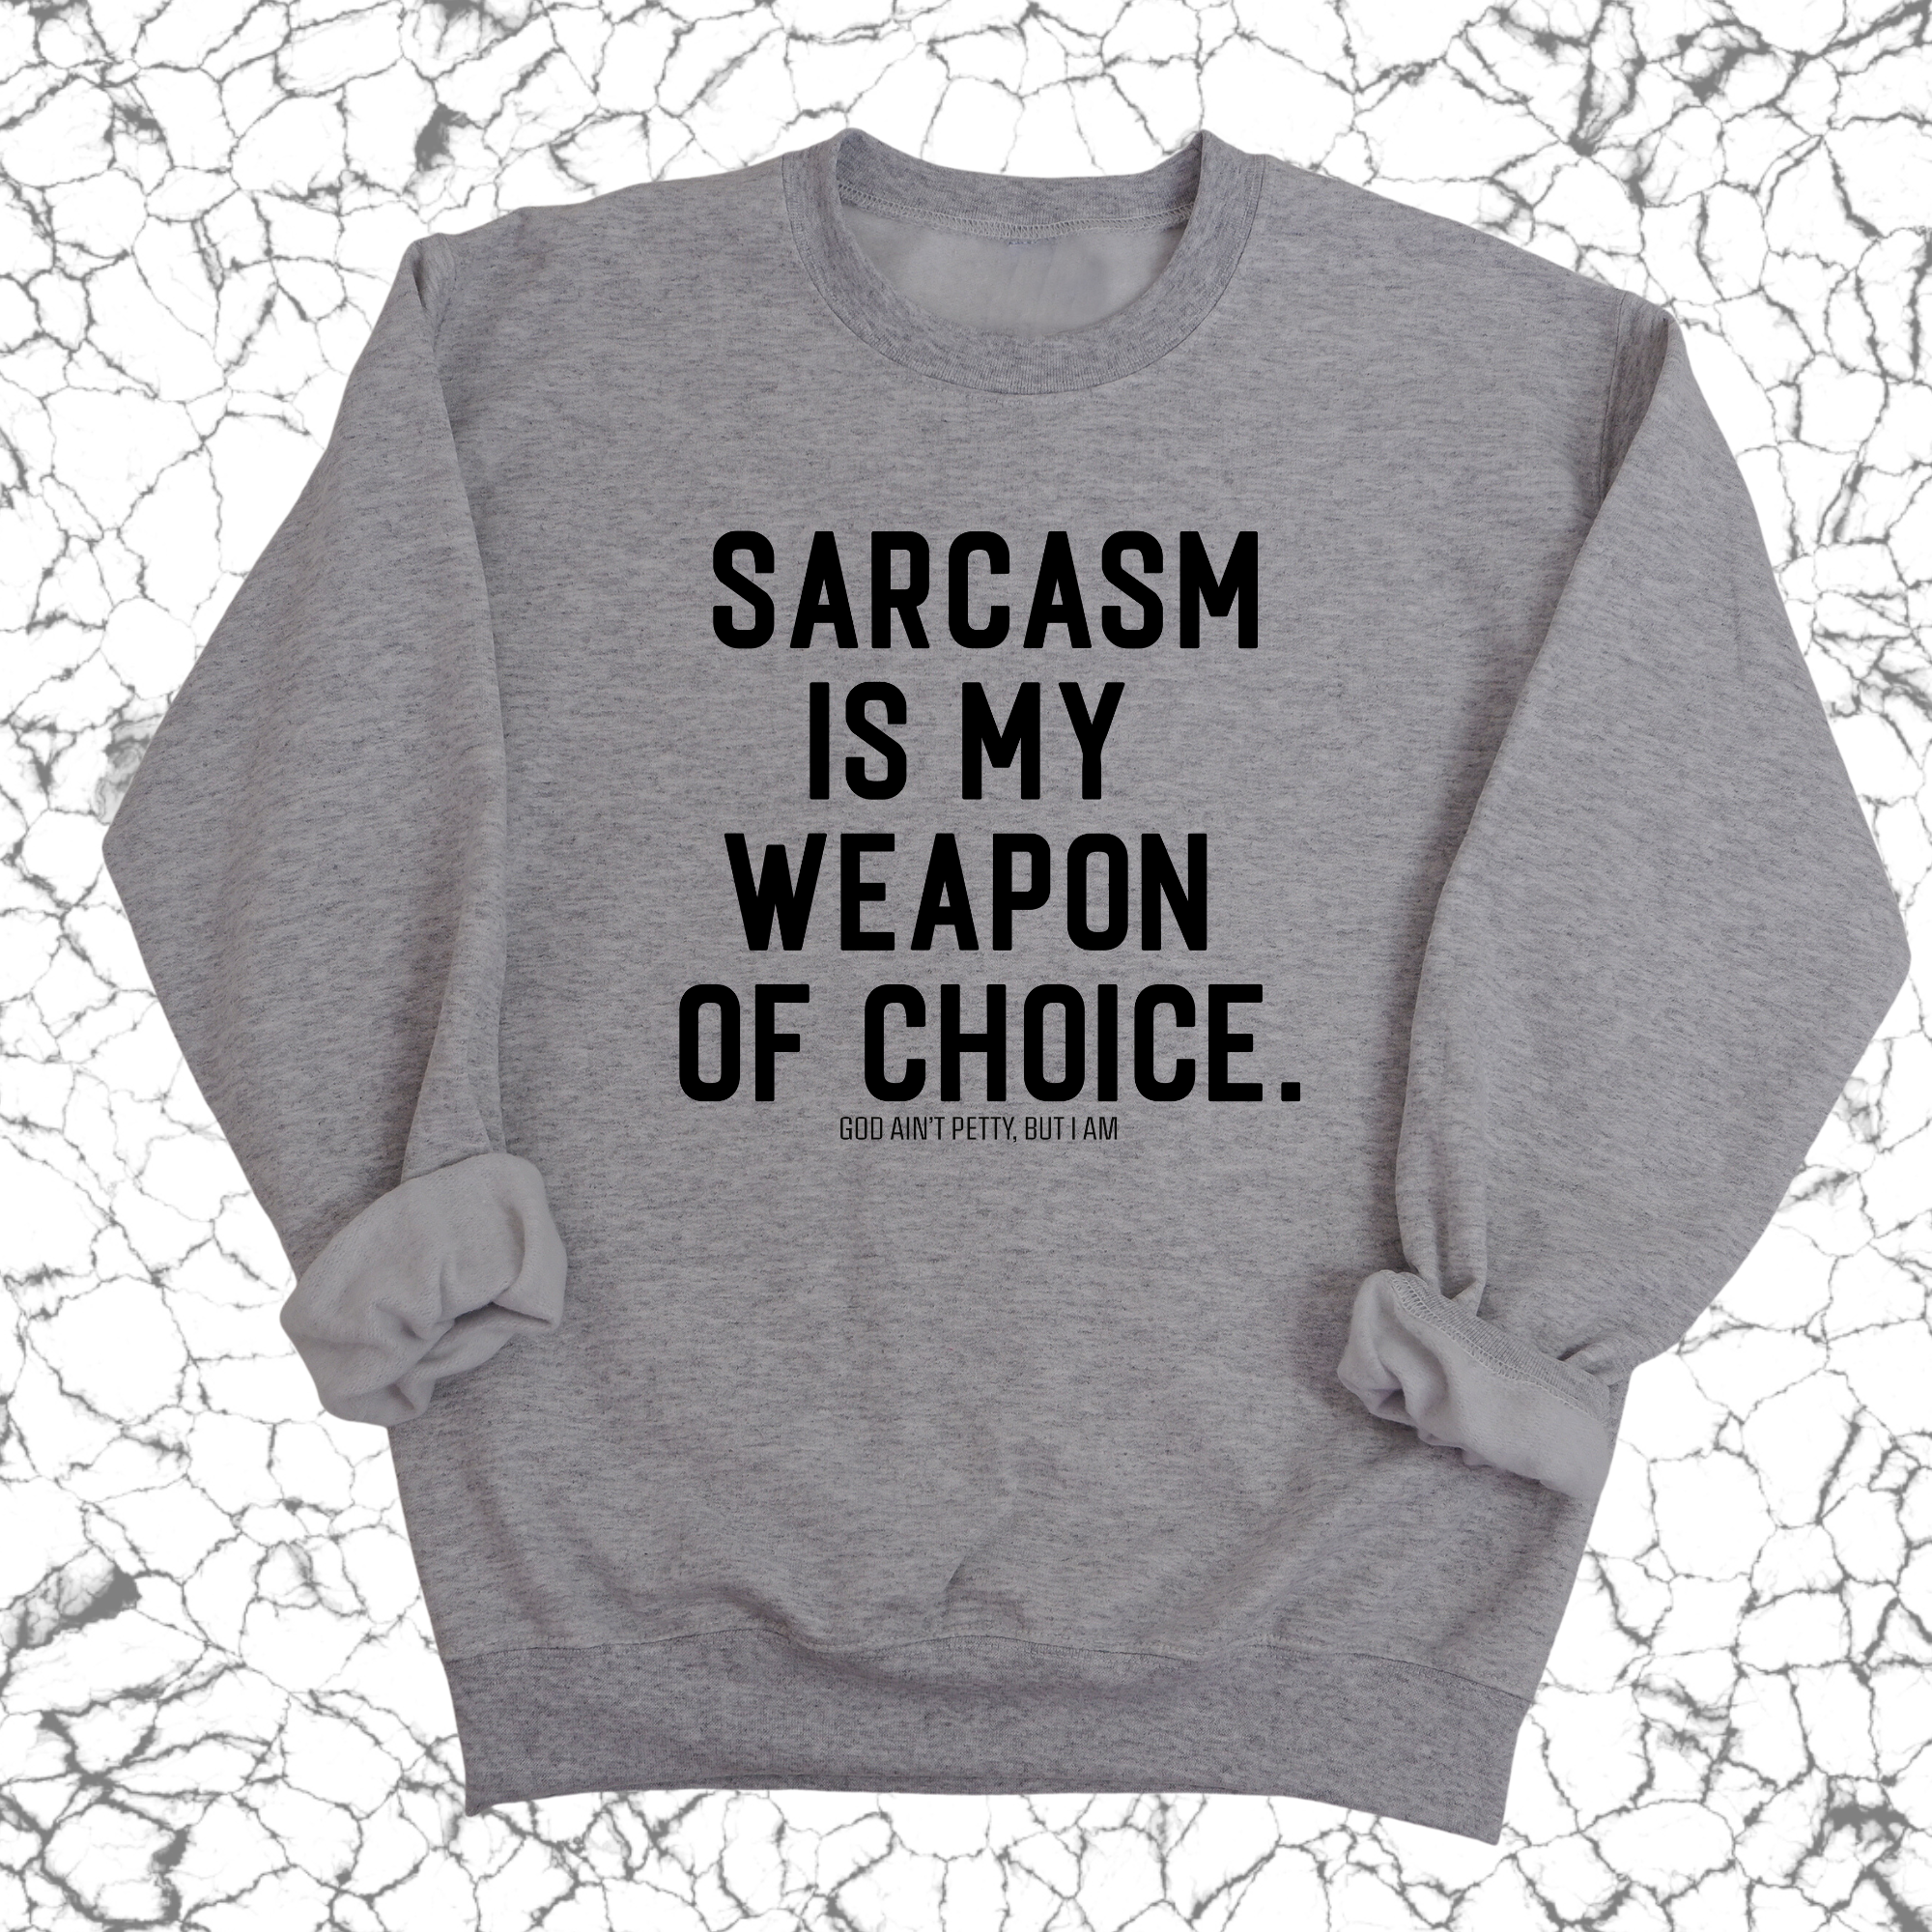 Sarcasm is my weapon of choice Unisex Sweatshirt-Sweatshirt-The Original God Ain't Petty But I Am